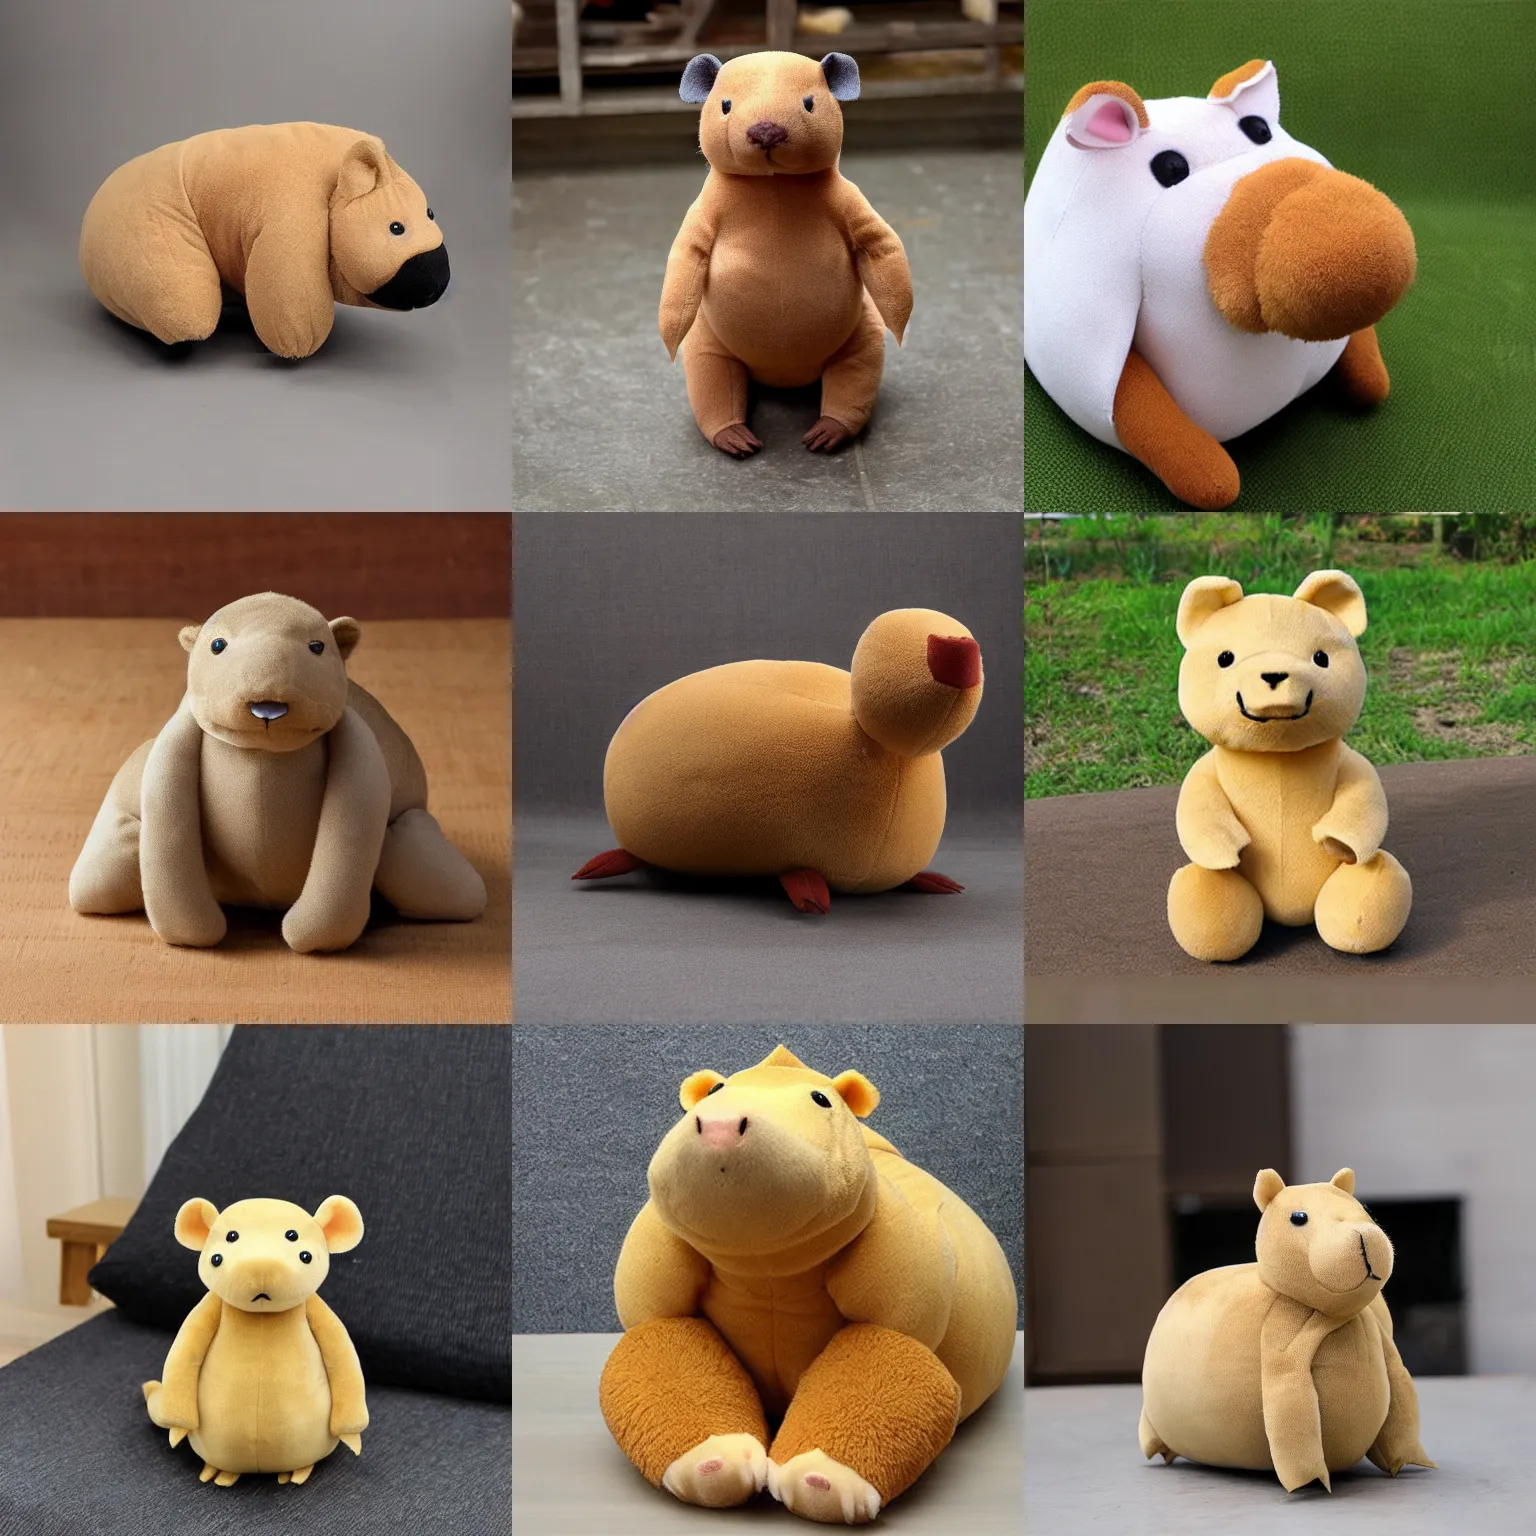 Prompt: capybara plush toy